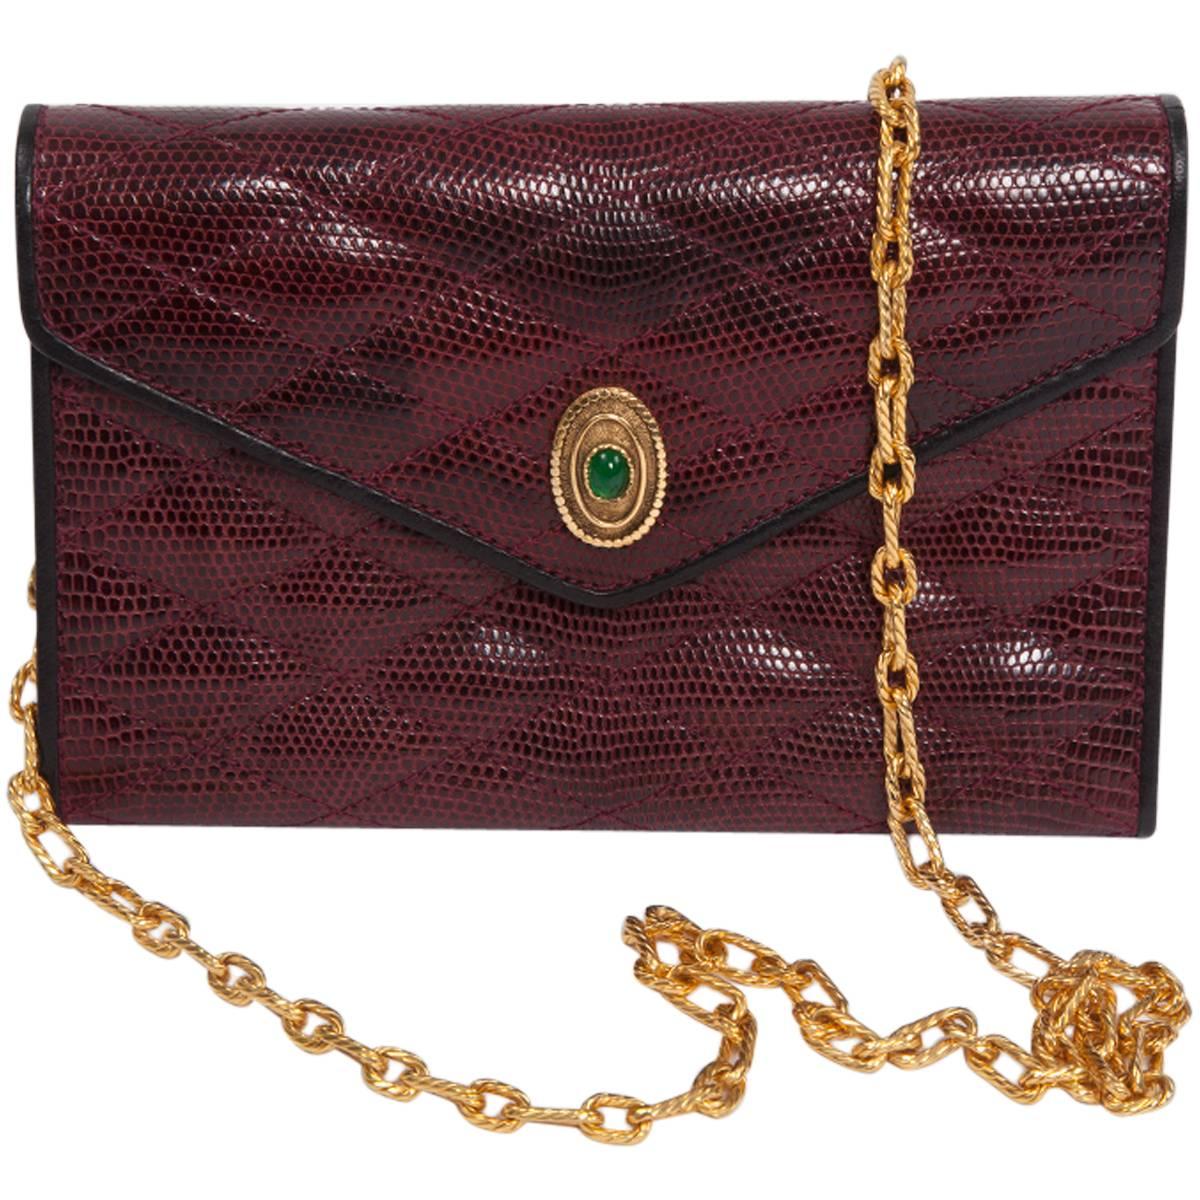 Chanel Embellished Lizard Bag 